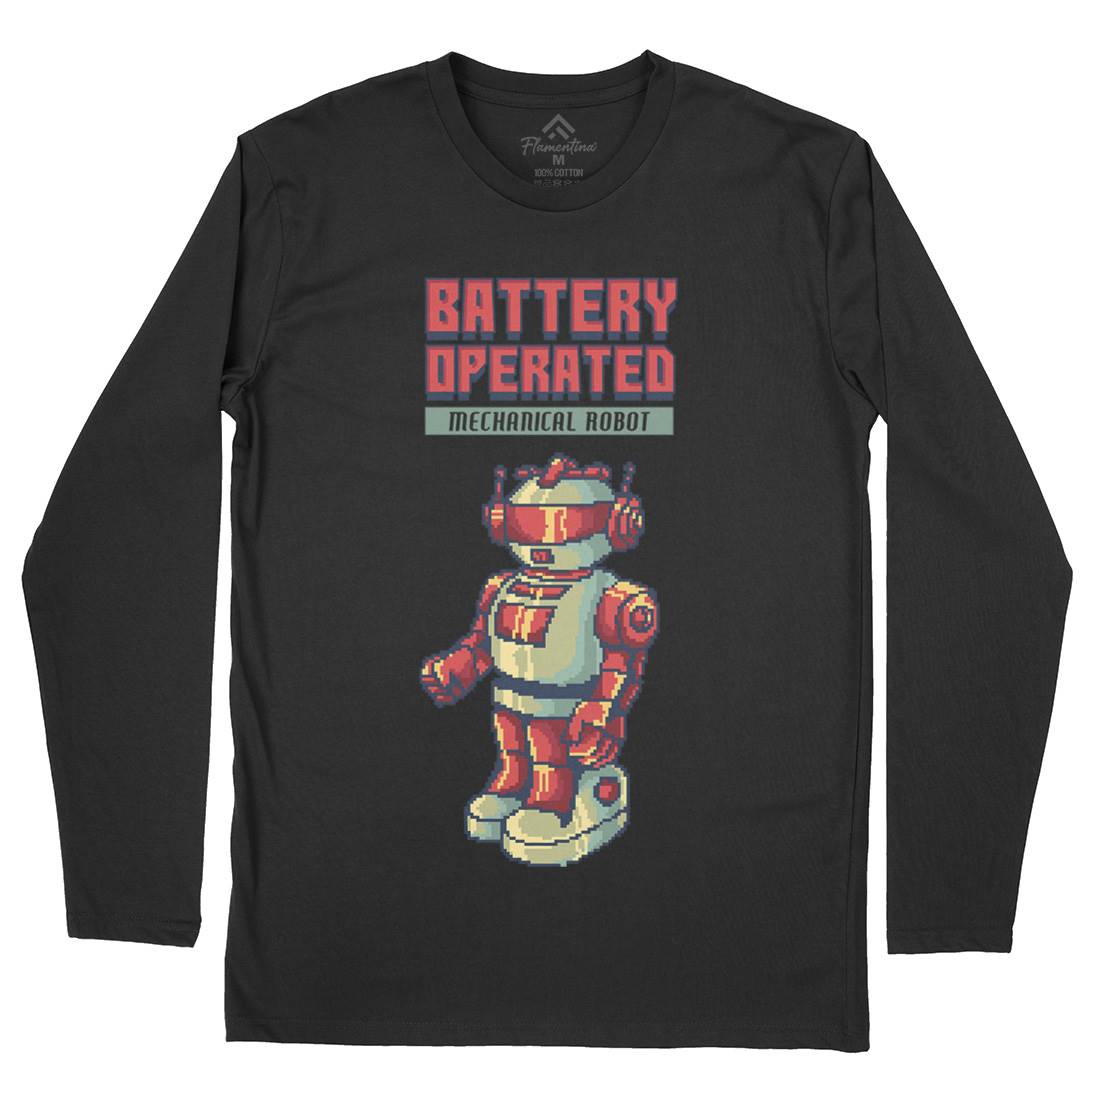 Vintages Robot Mens Long Sleeve T-Shirt Retro B977